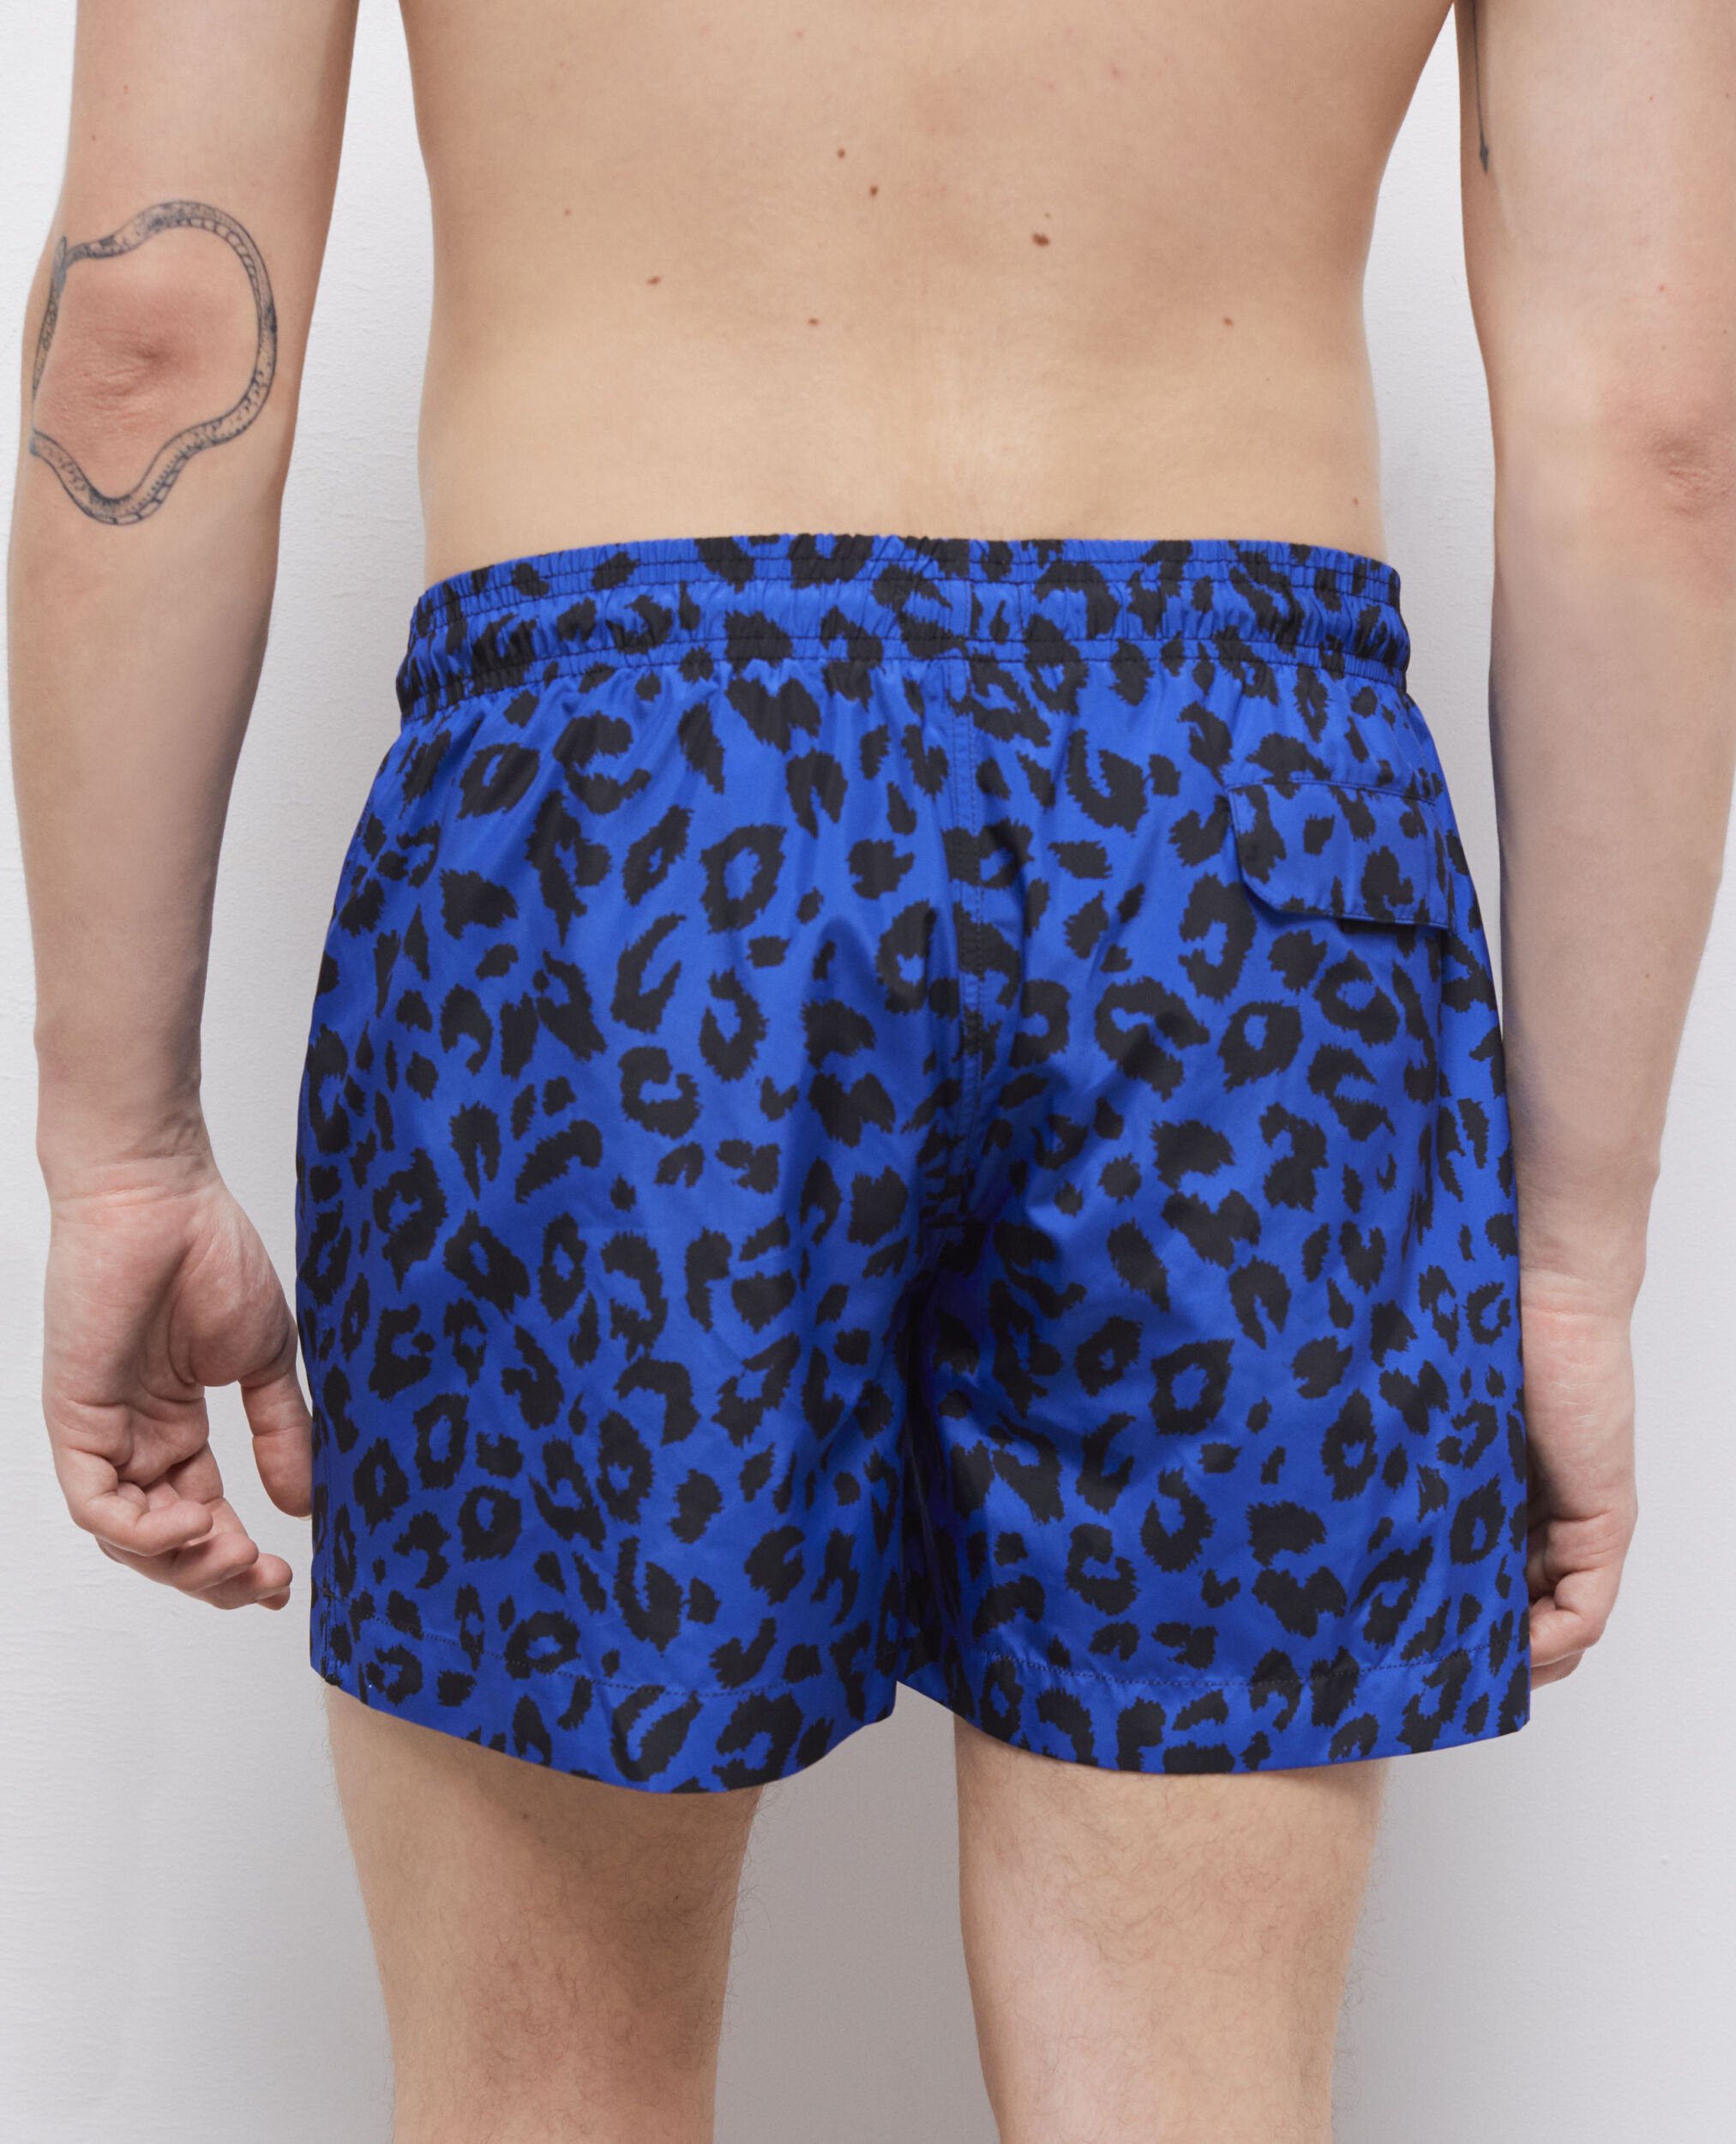 Maillot de bain léopard bleu, BLUE ELECTRIC, hi-res image number null